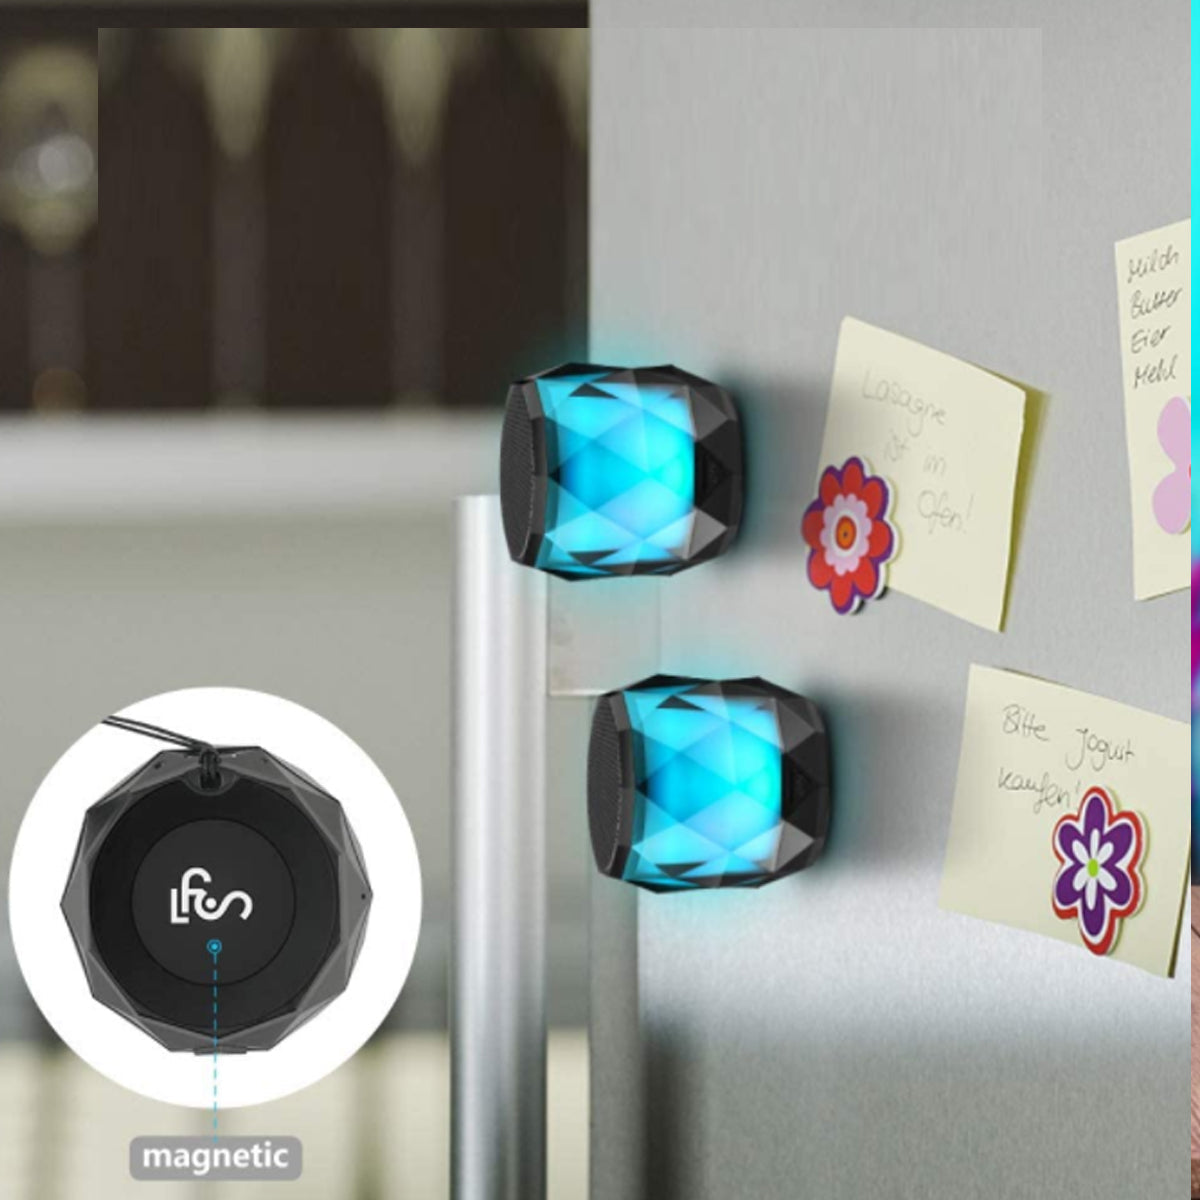 Candylight LED Stereo Bluetooth Mini Speaker by VistaShops